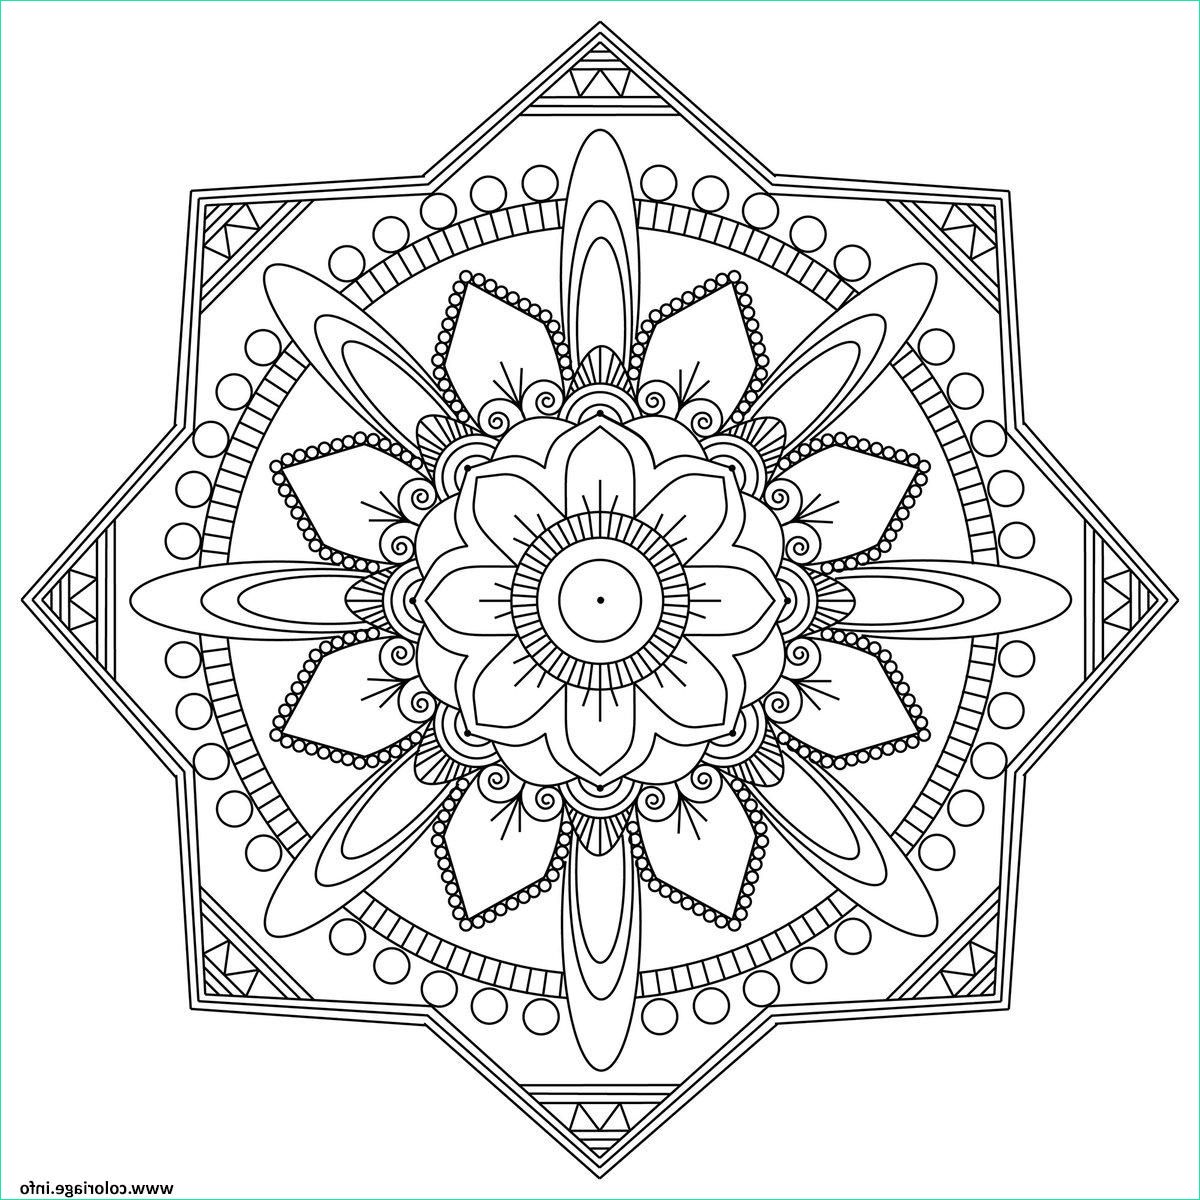 Coloriage Mandala Imprimer Luxe Image Coloriage Mandala Adulte 2017 Rose Dessin